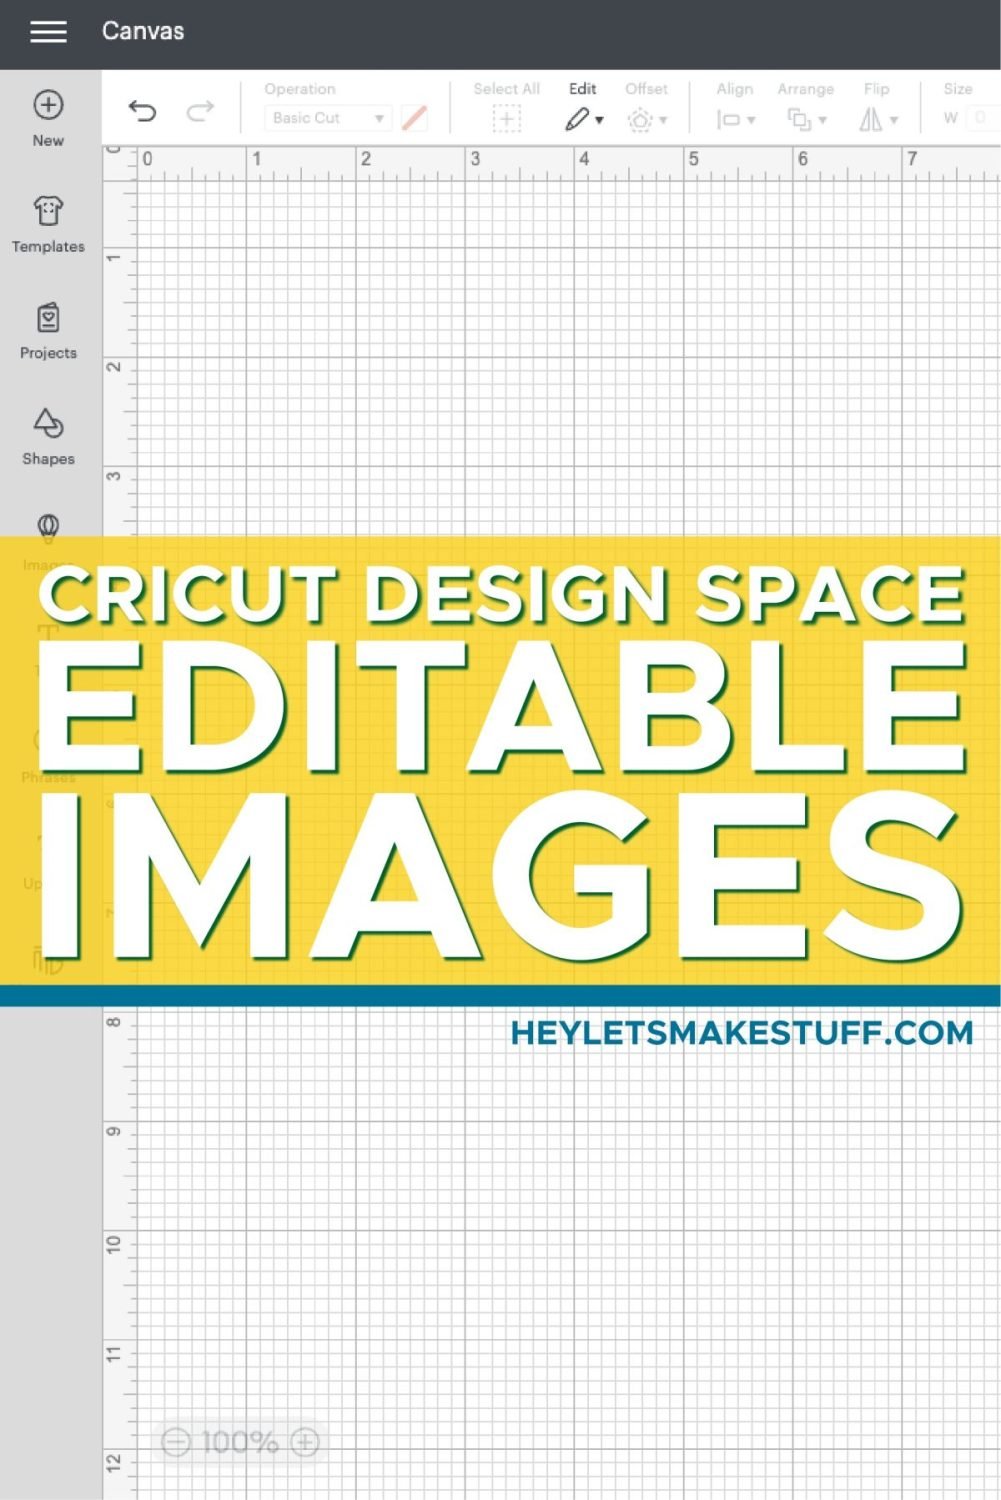 Editable Images in Cricut Design Space on a Cricut Canvas